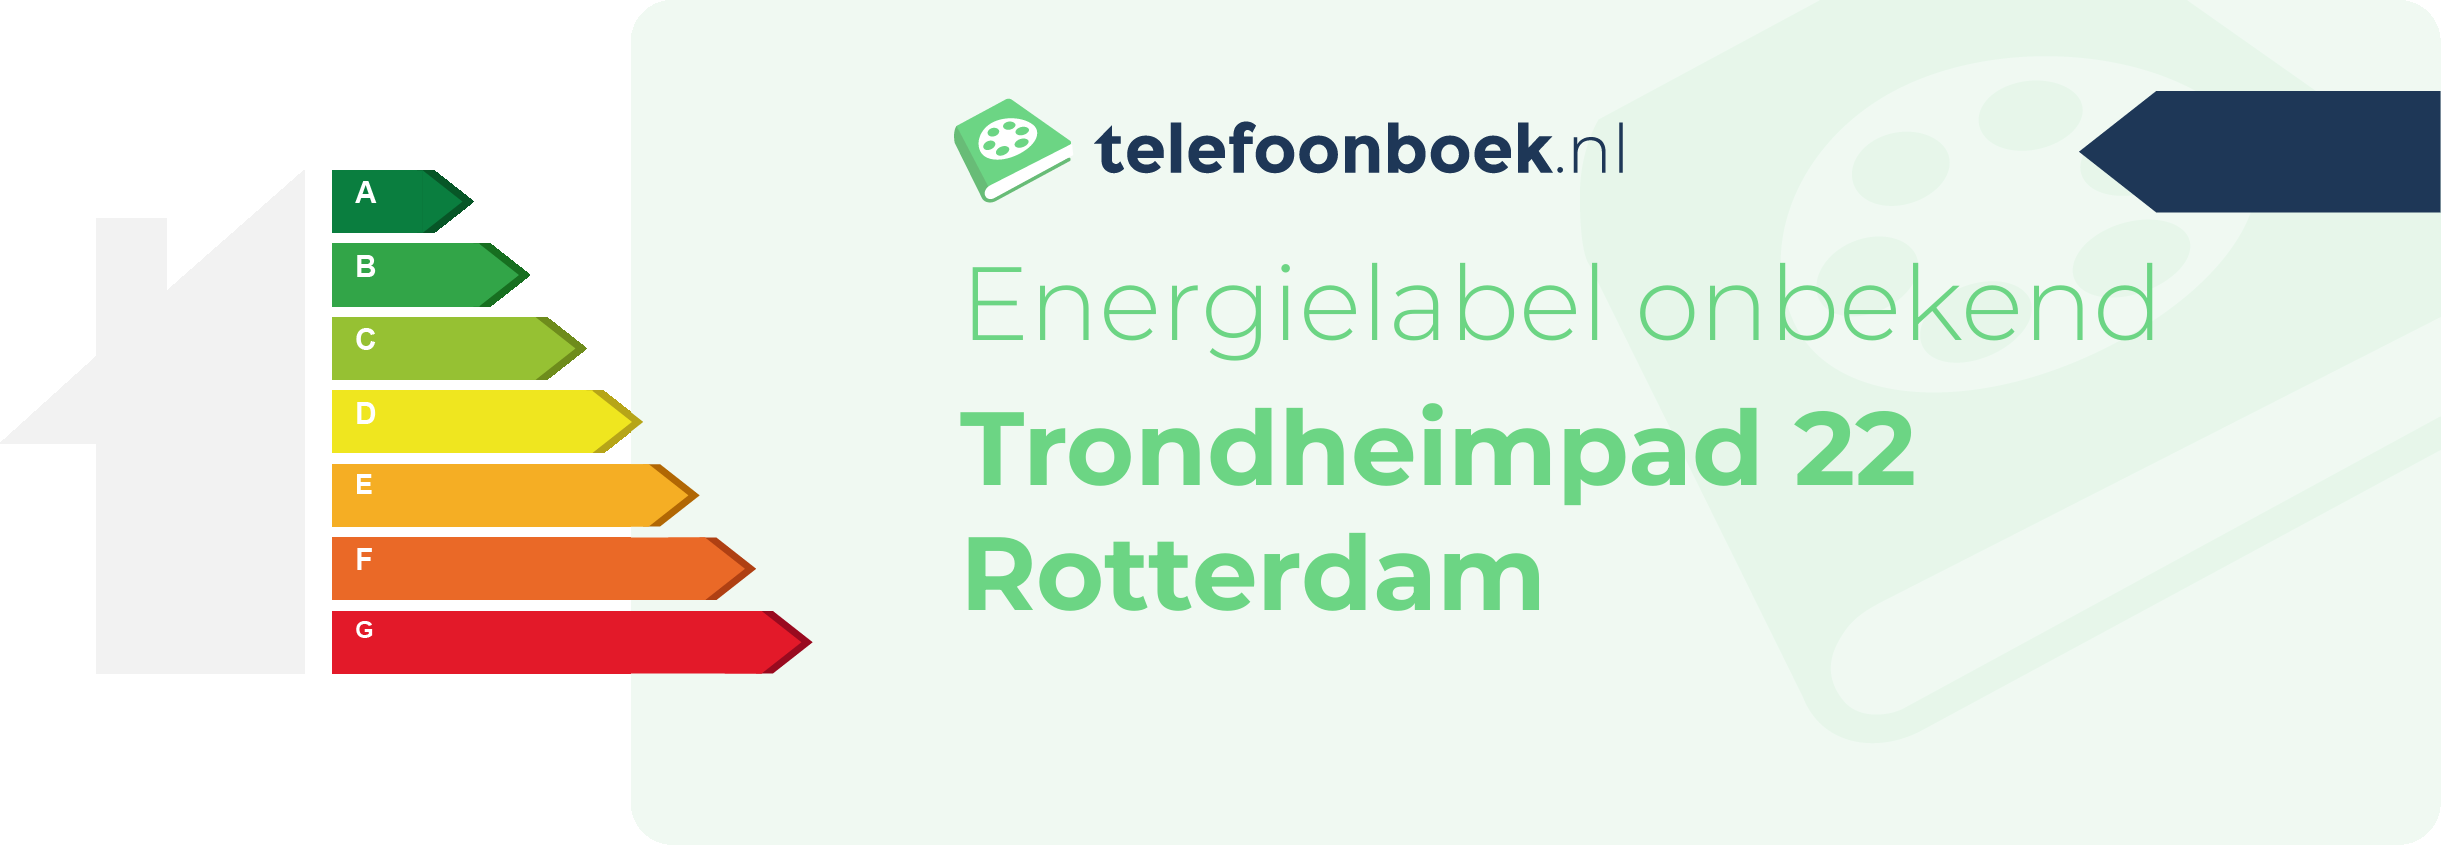 Energielabel Trondheimpad 22 Rotterdam